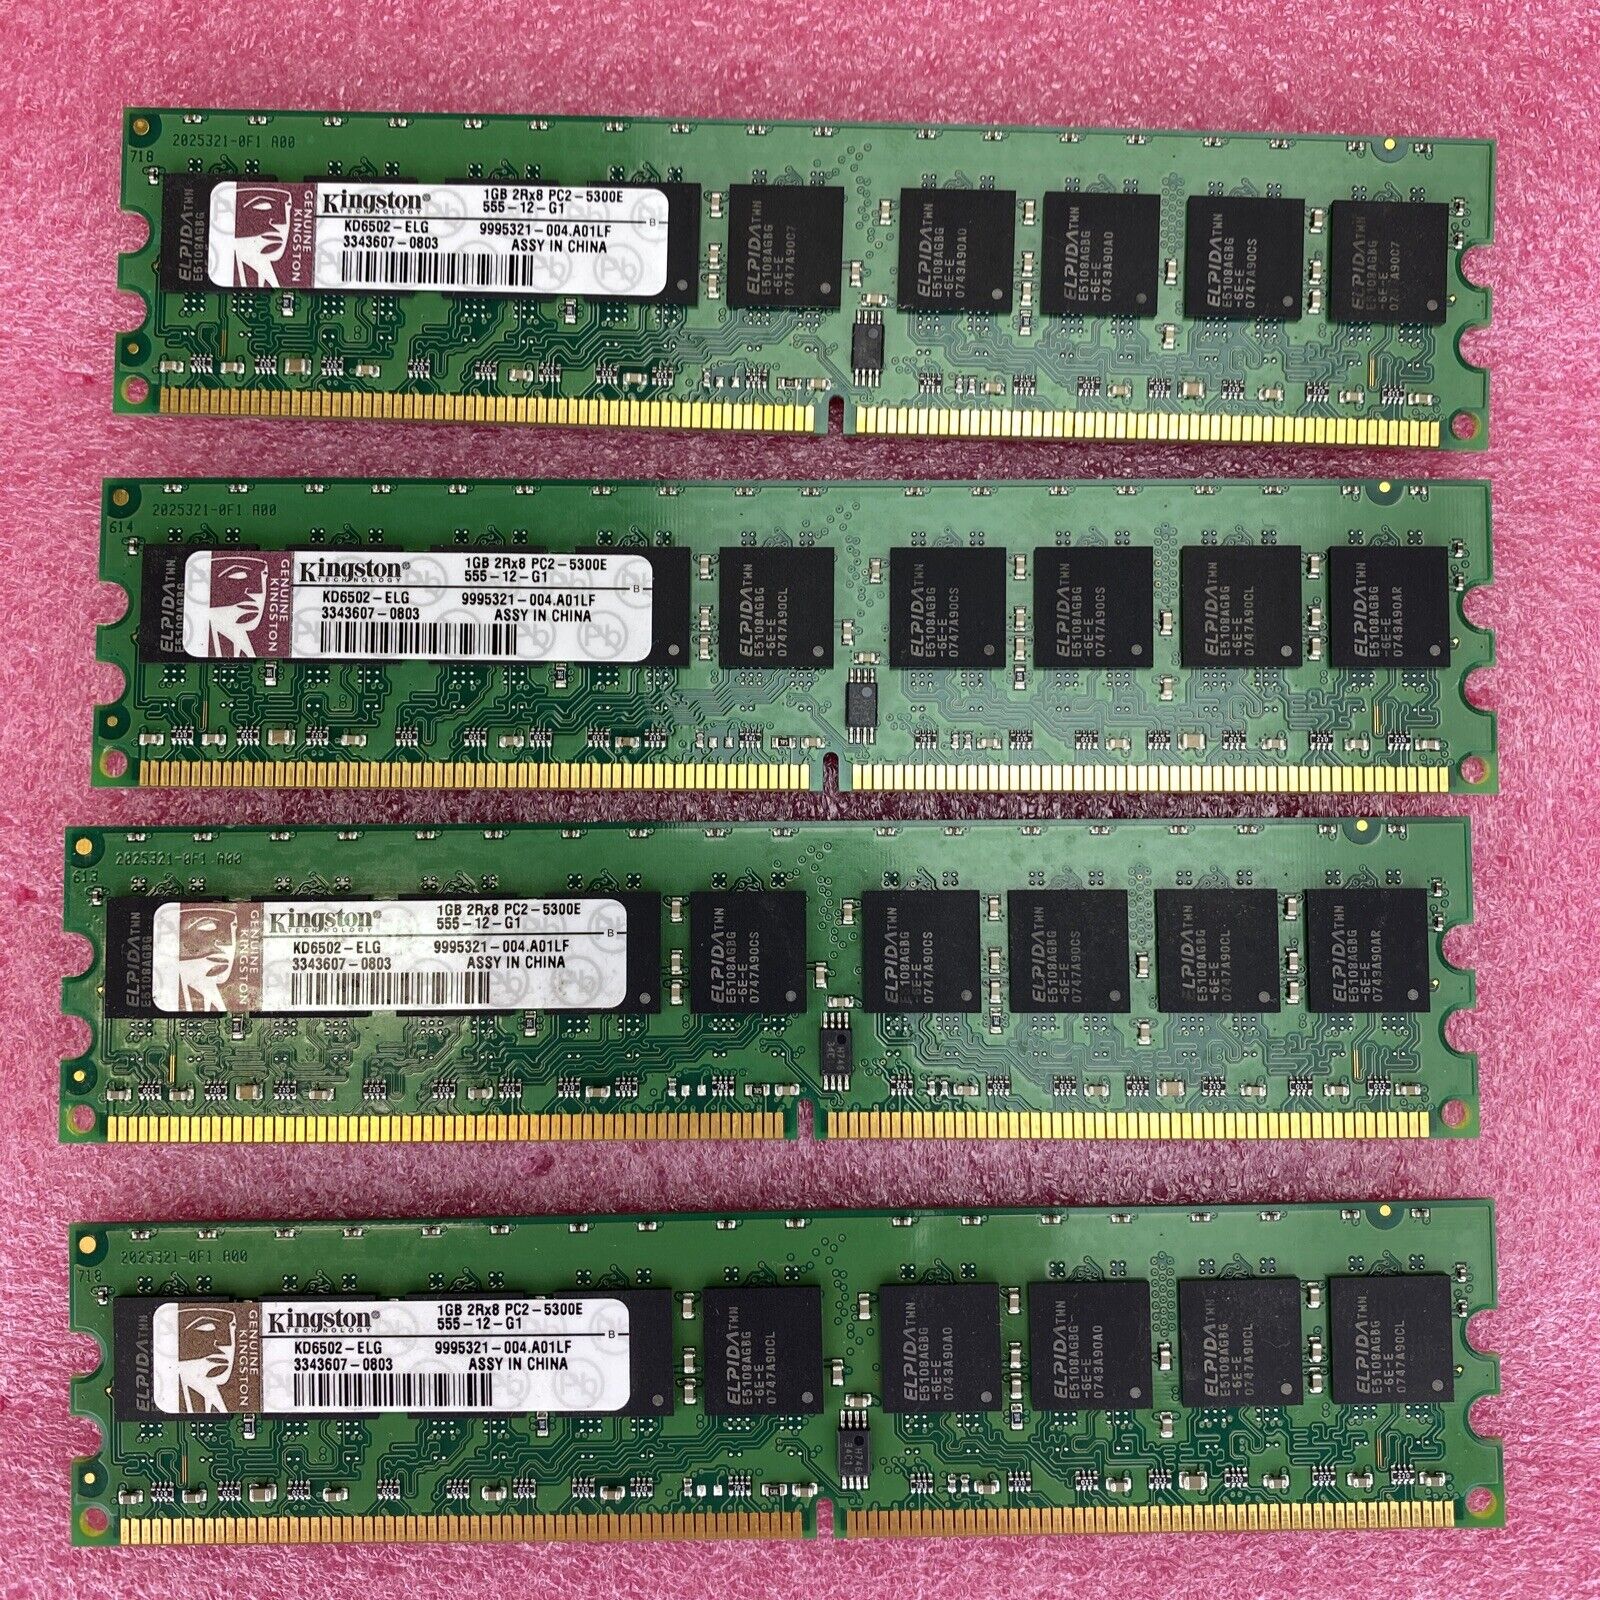 4x 1GB Kingston KD6502-ELG PC2-5300E DDR2 667 memory kit ECC RAM